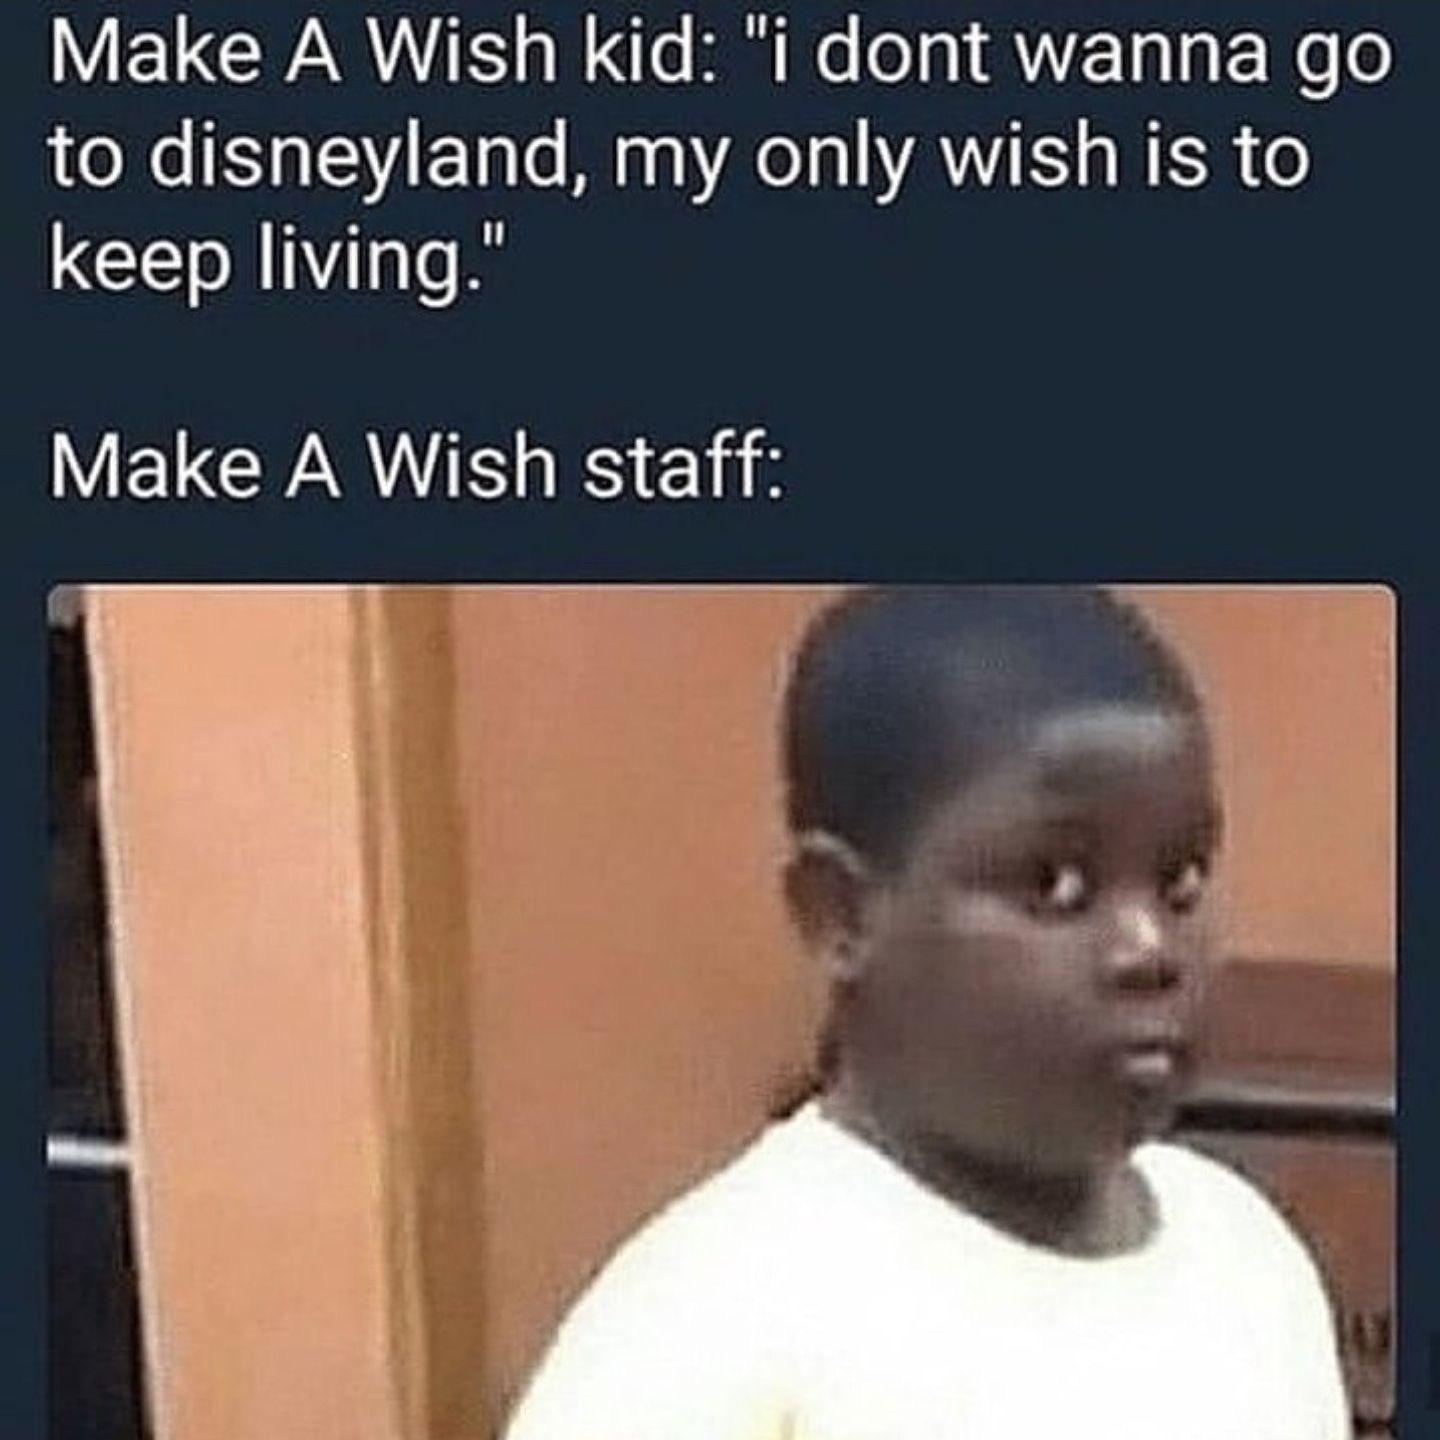 dark memes 2019 - Make A Wish kid "i dont wanna go to disneyland, my only wish is to keep living." Make A Wish staff